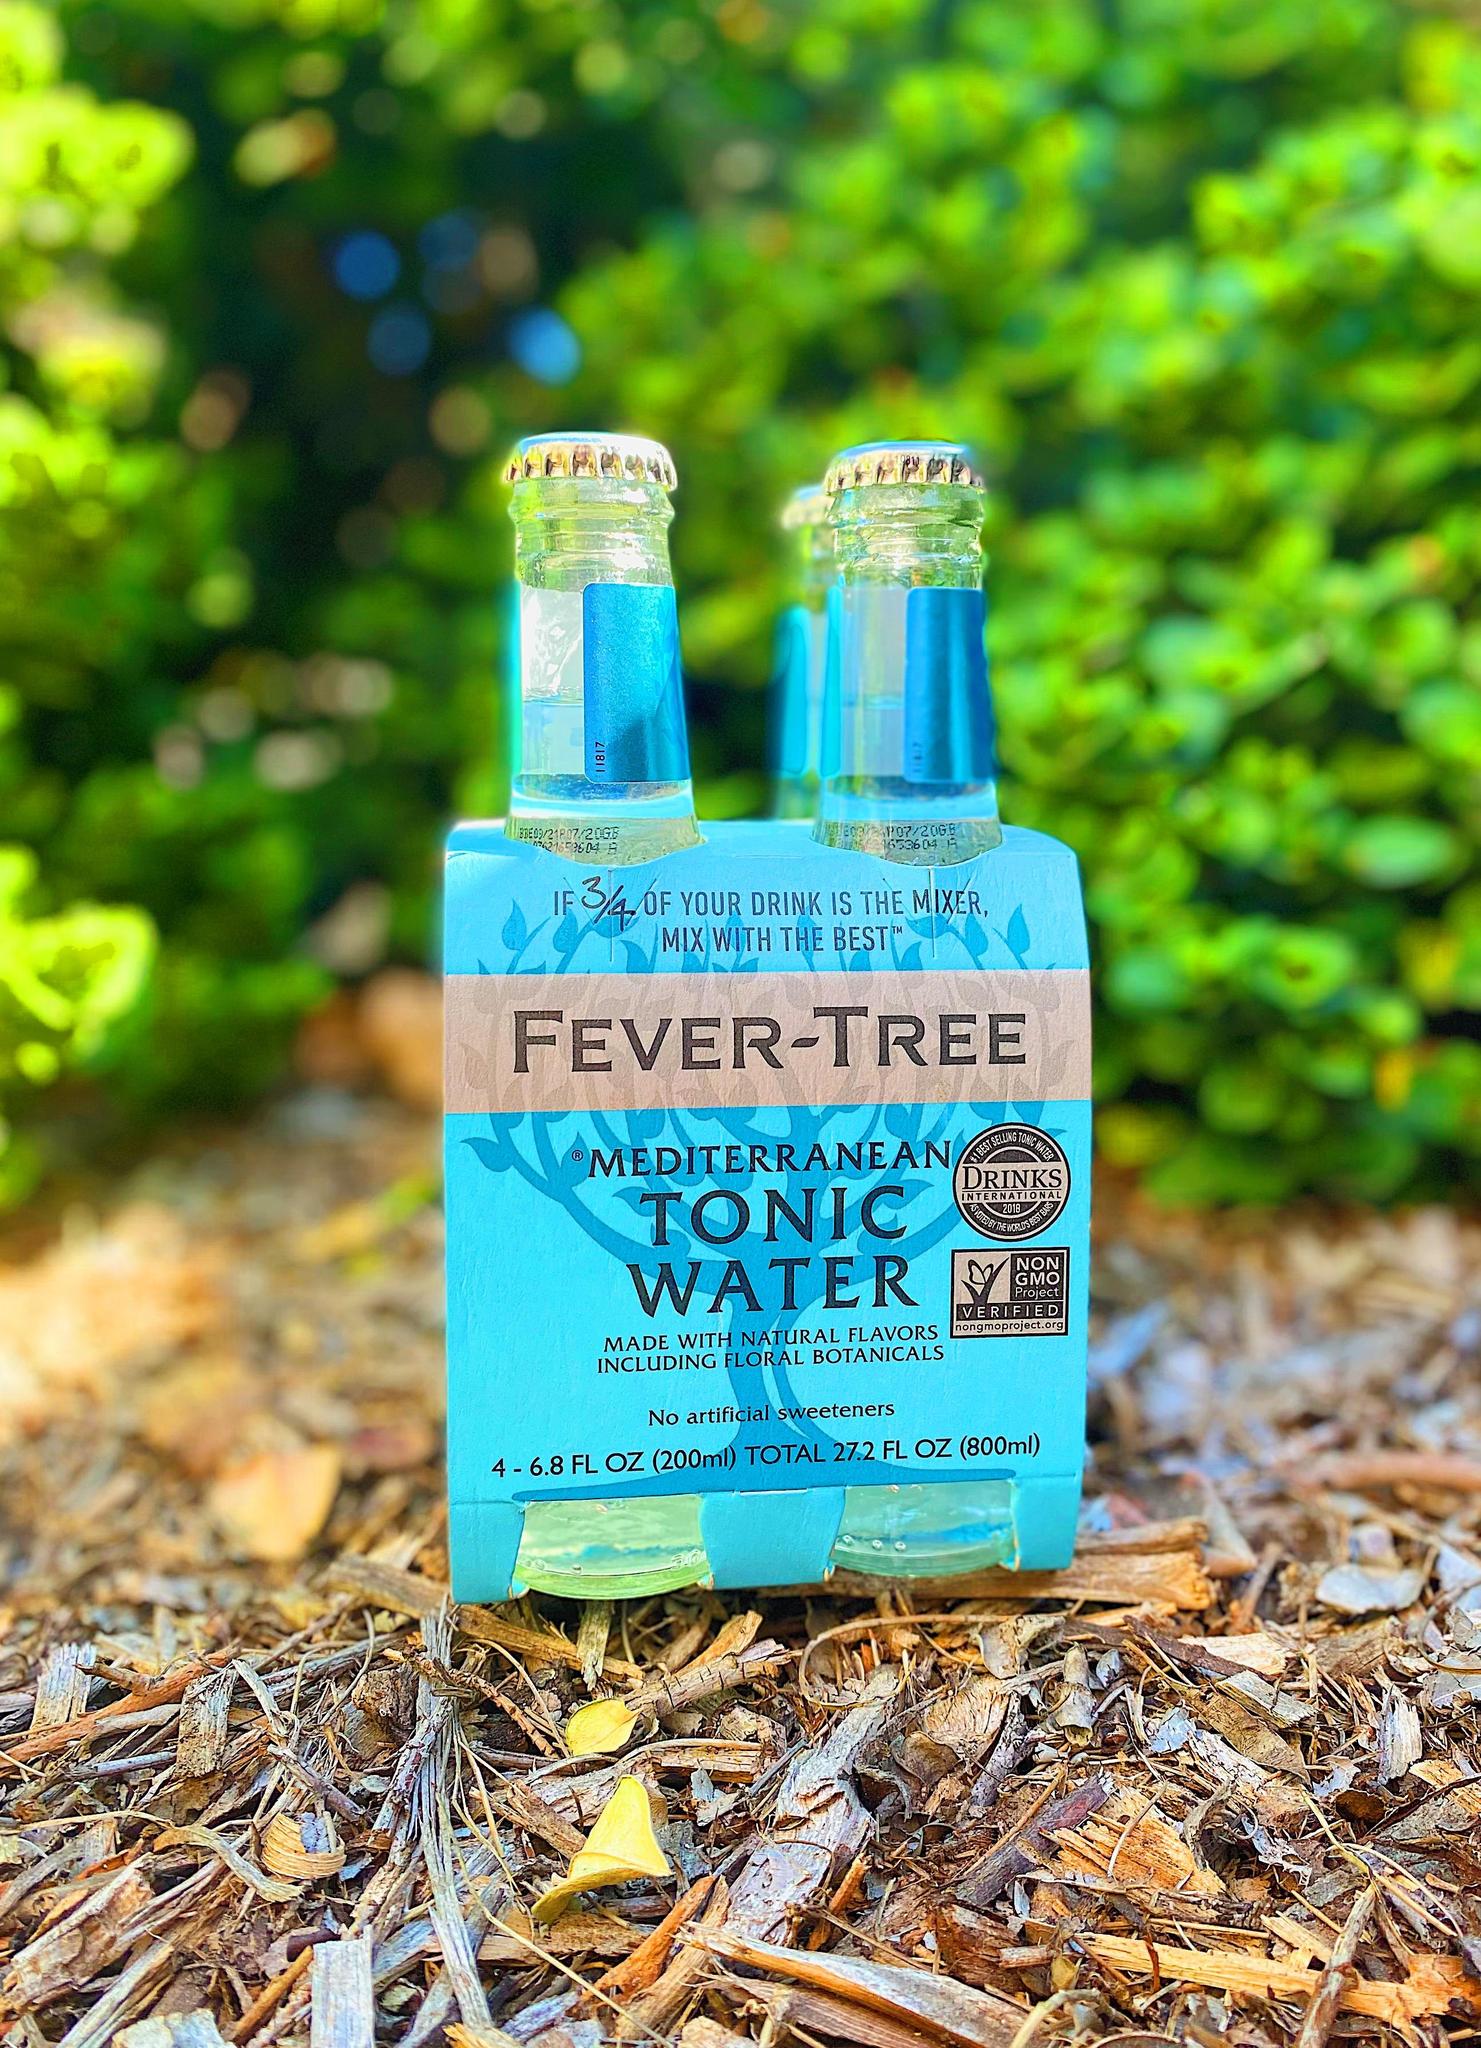 Fever Tree Indian Tonic Water - Moore Wilson's